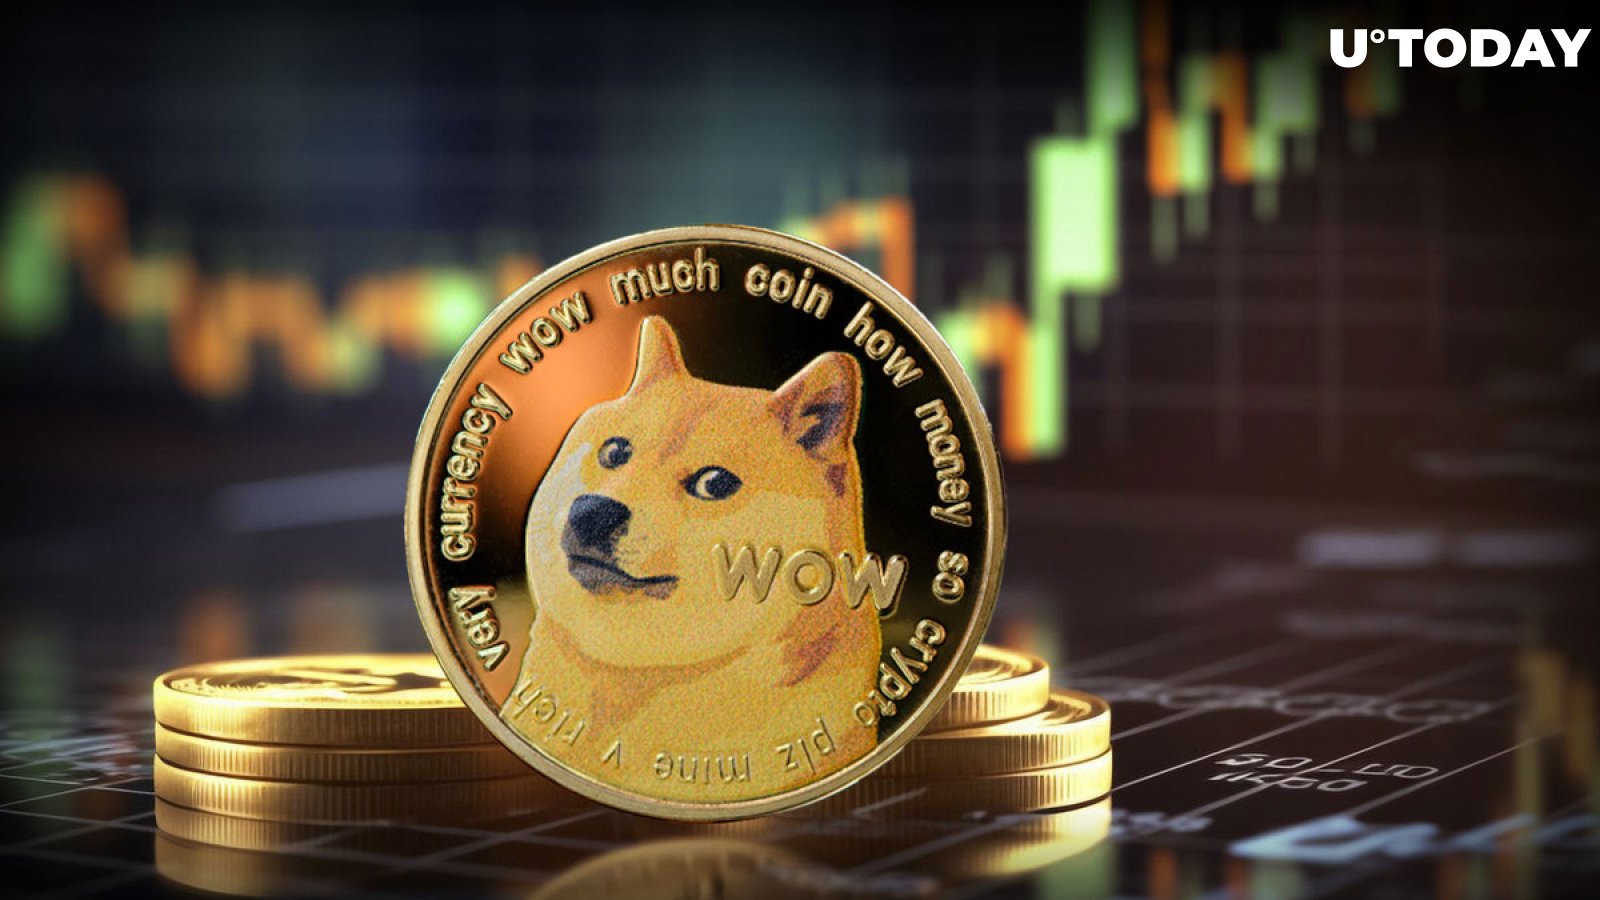 Dogecoin Price Prediction: , , , - 